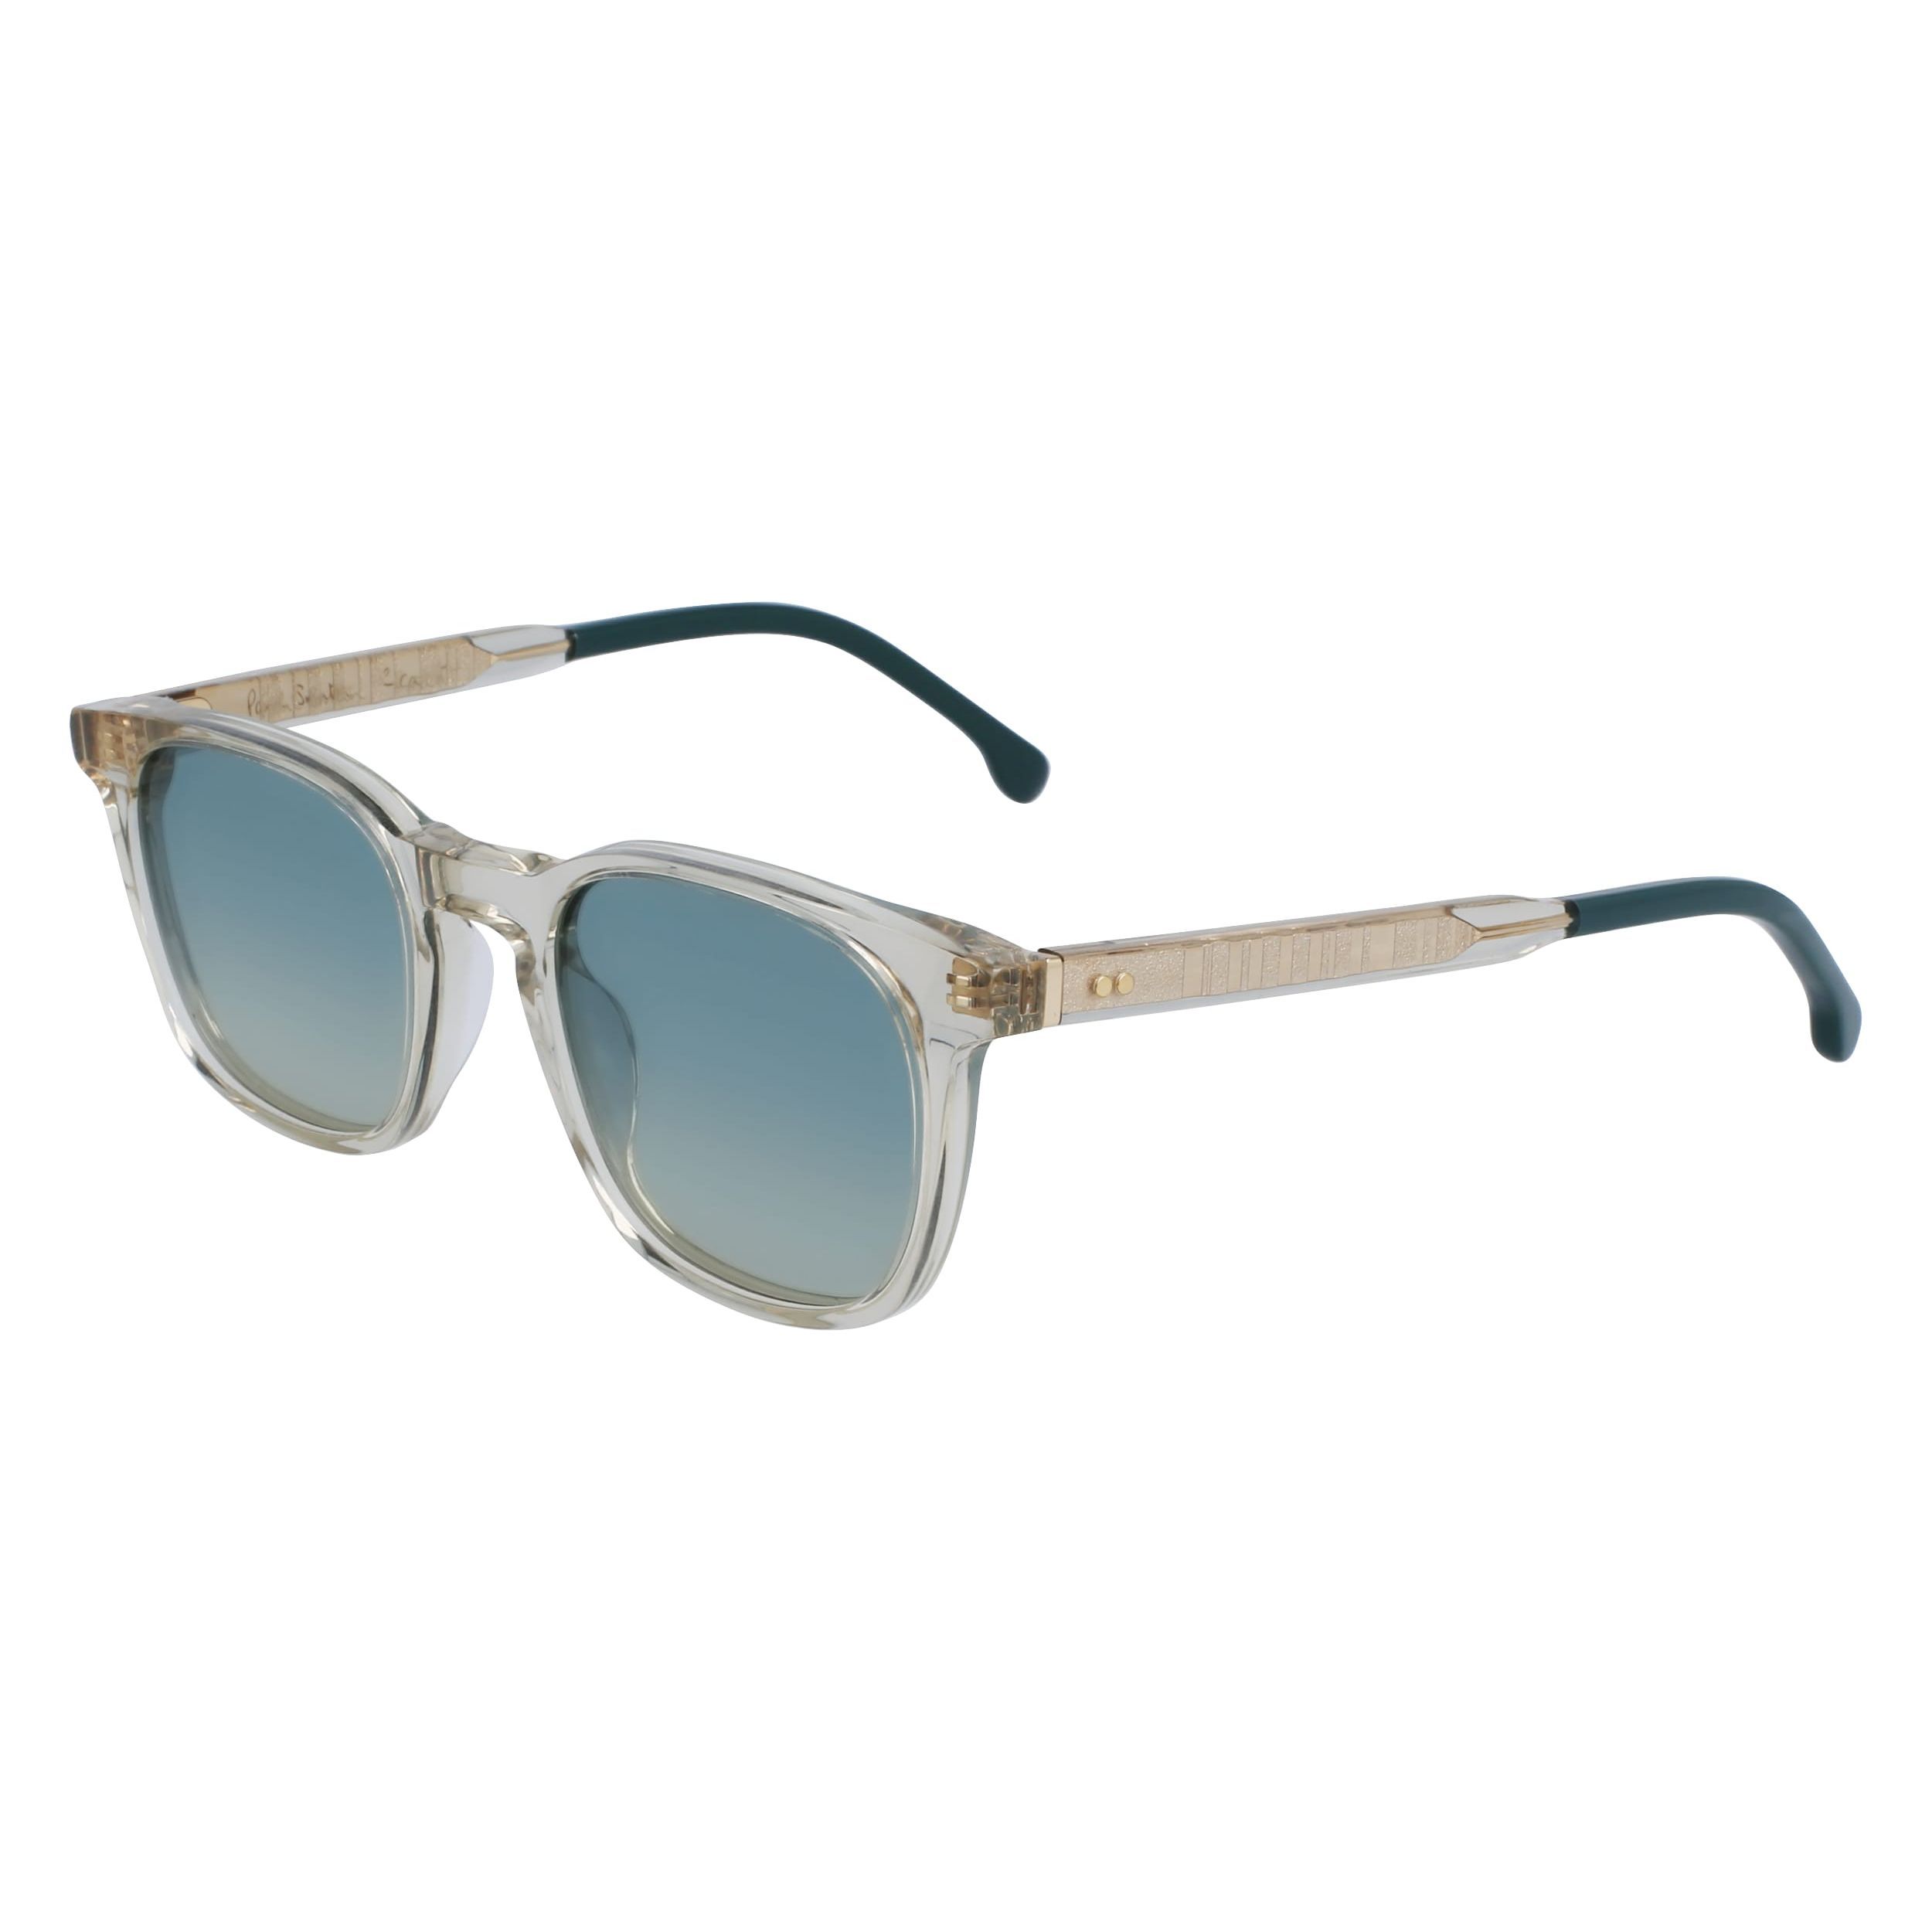 GRANT Oval Sunglasses 003 - size 50